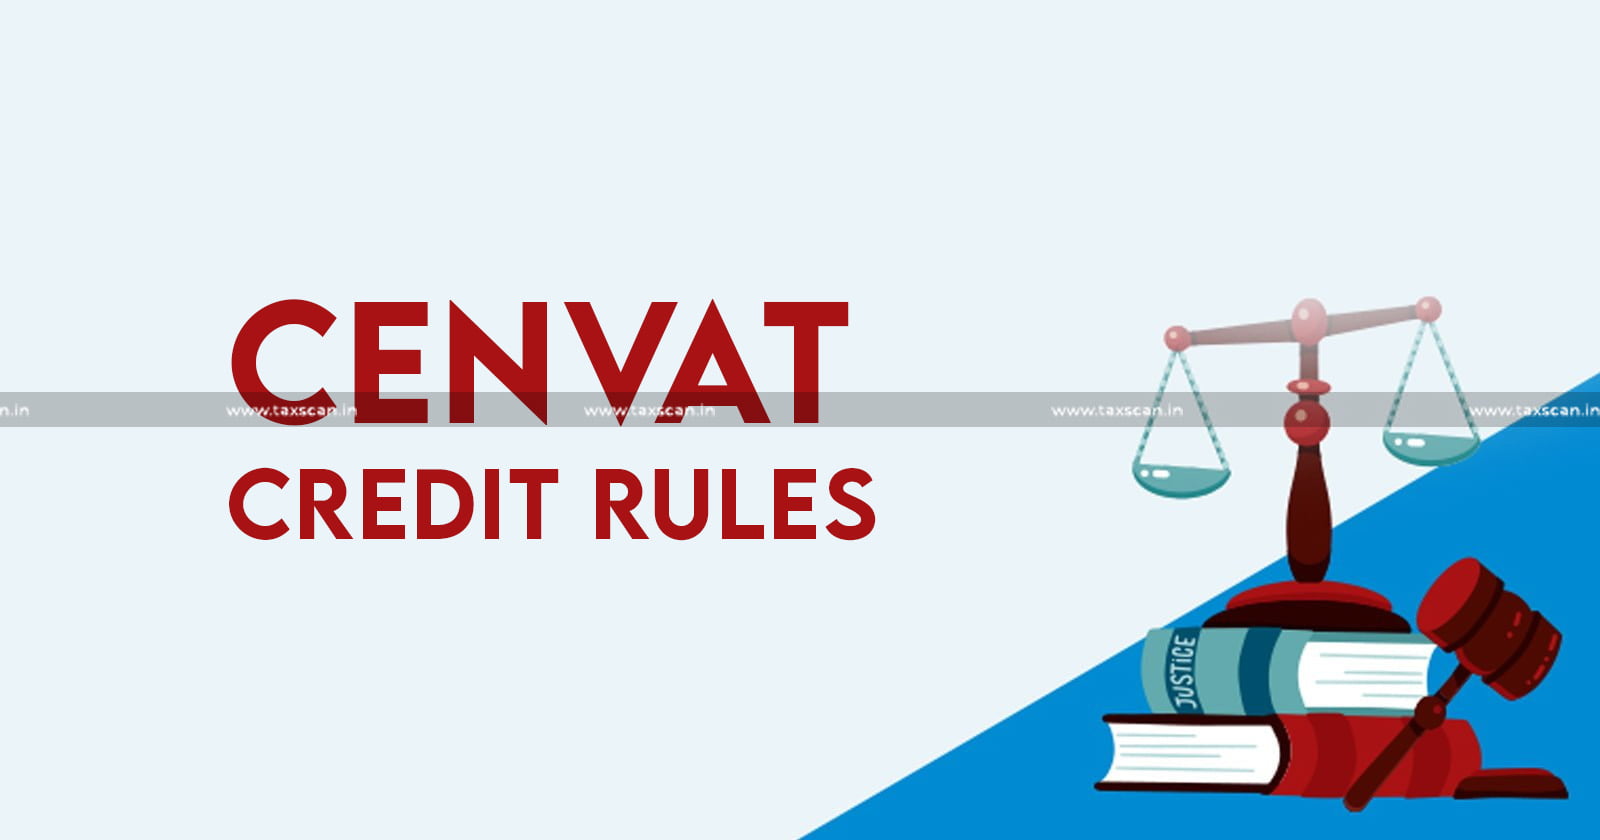 Refund on Unutilised Cenvat Credit - Prescribed Format Under Cenvat Credit Rules - Cenvat Credit - Cenvat Credit Rules - CESTAT allows Refund - CESTAT - Refund - Taxscan